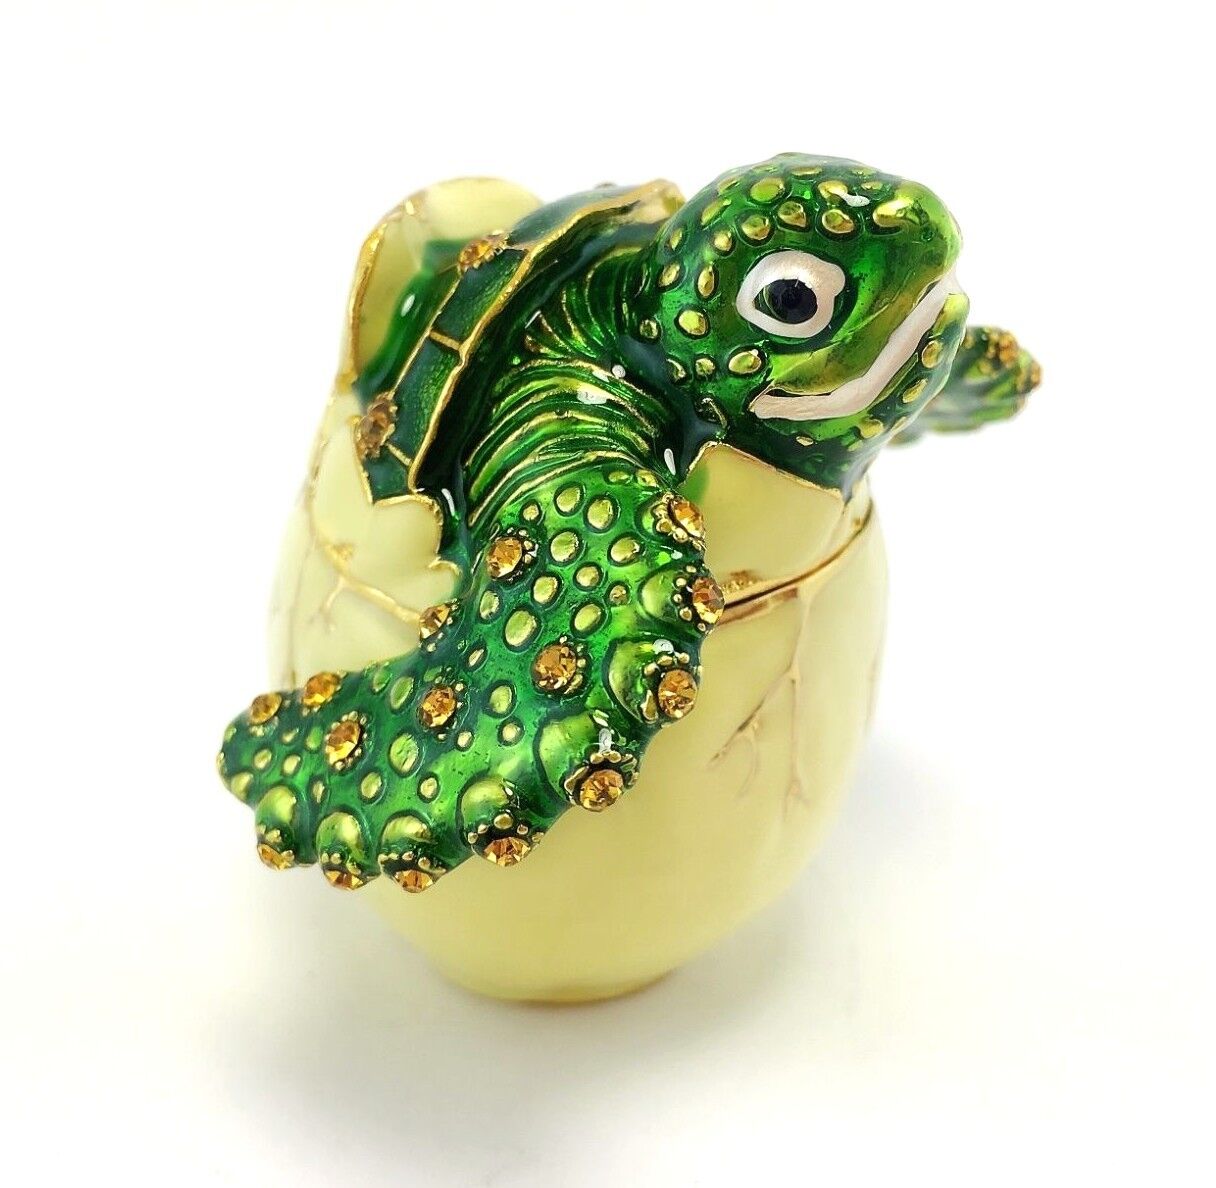 Turtle in Egg Fish Jewelry Trinket Box Decorative Collectible Sea Fun Gift 02060